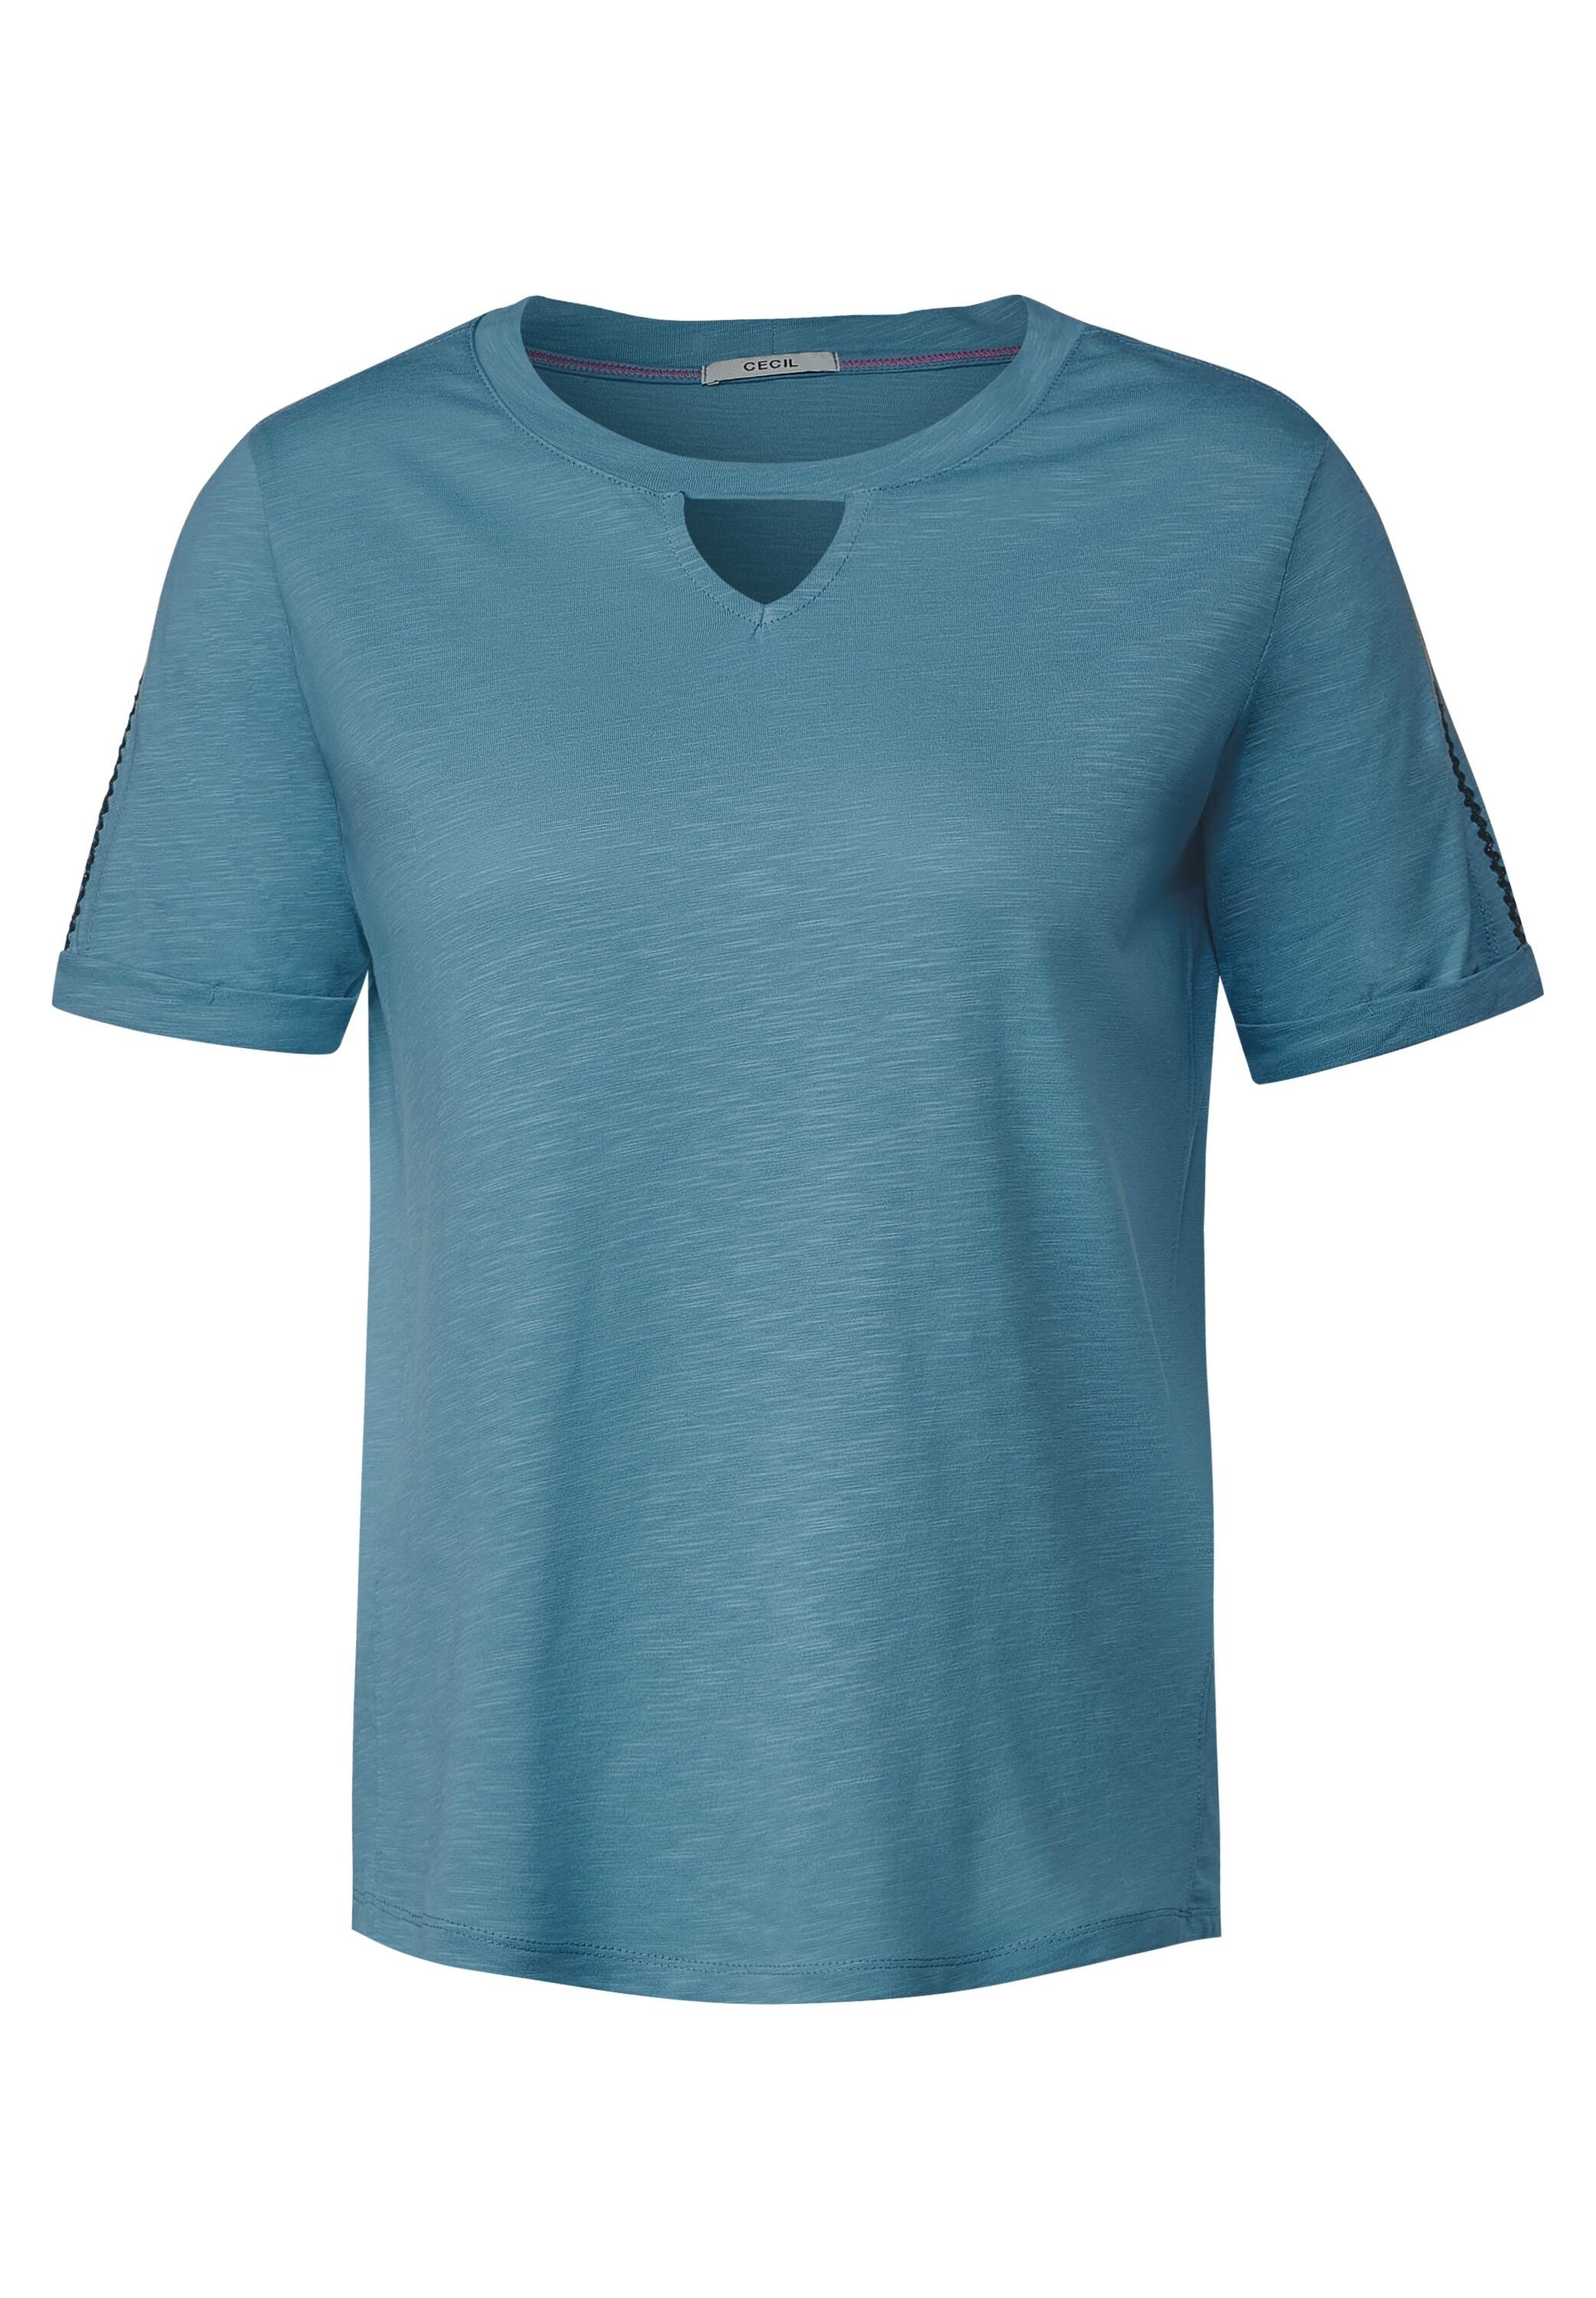 softem adriatic blue T-Shirt Cecil Materialmix aus